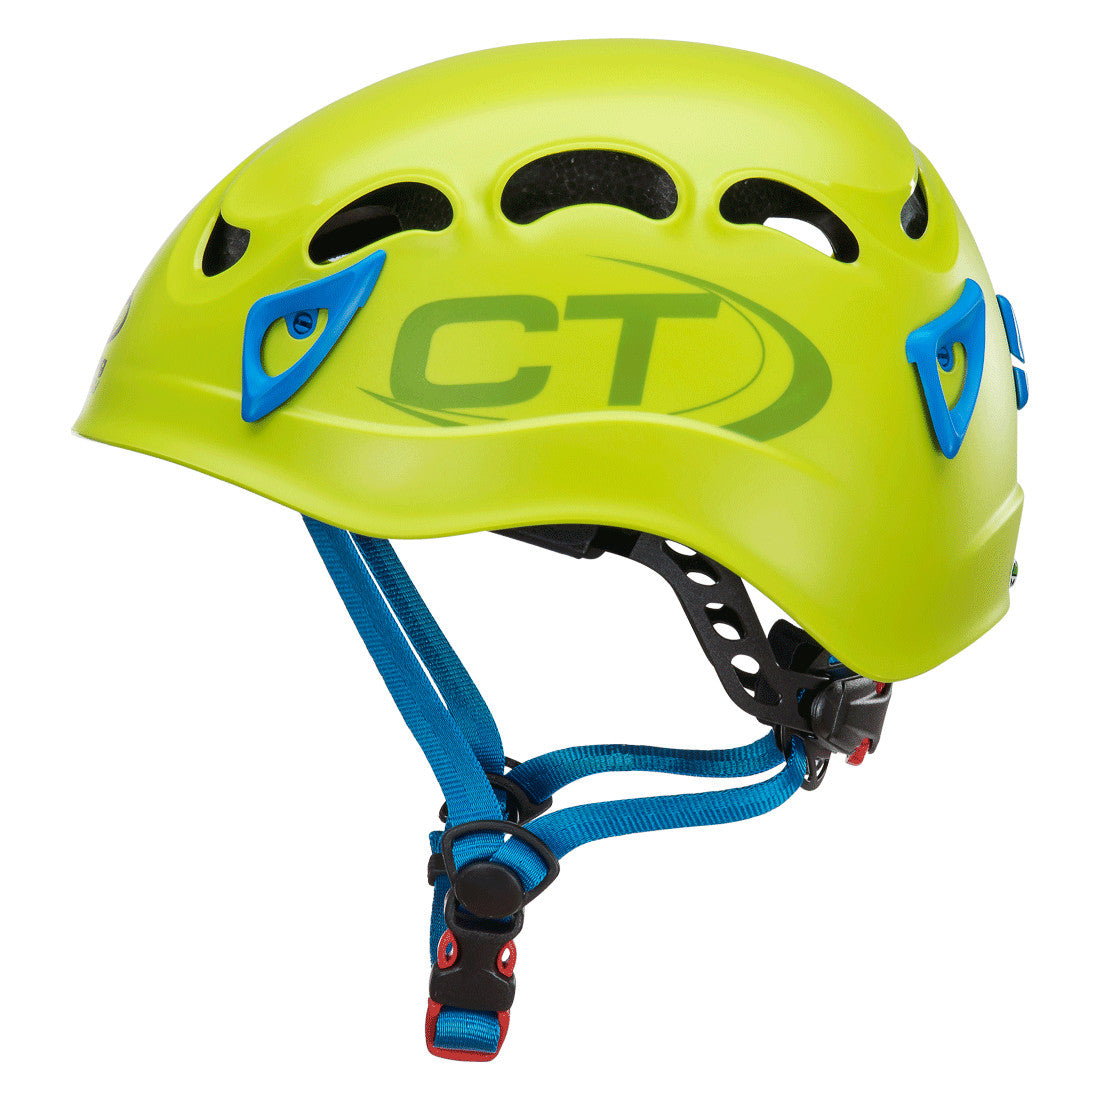 Climbing Technology Galaxy climbing helmet, showing side view